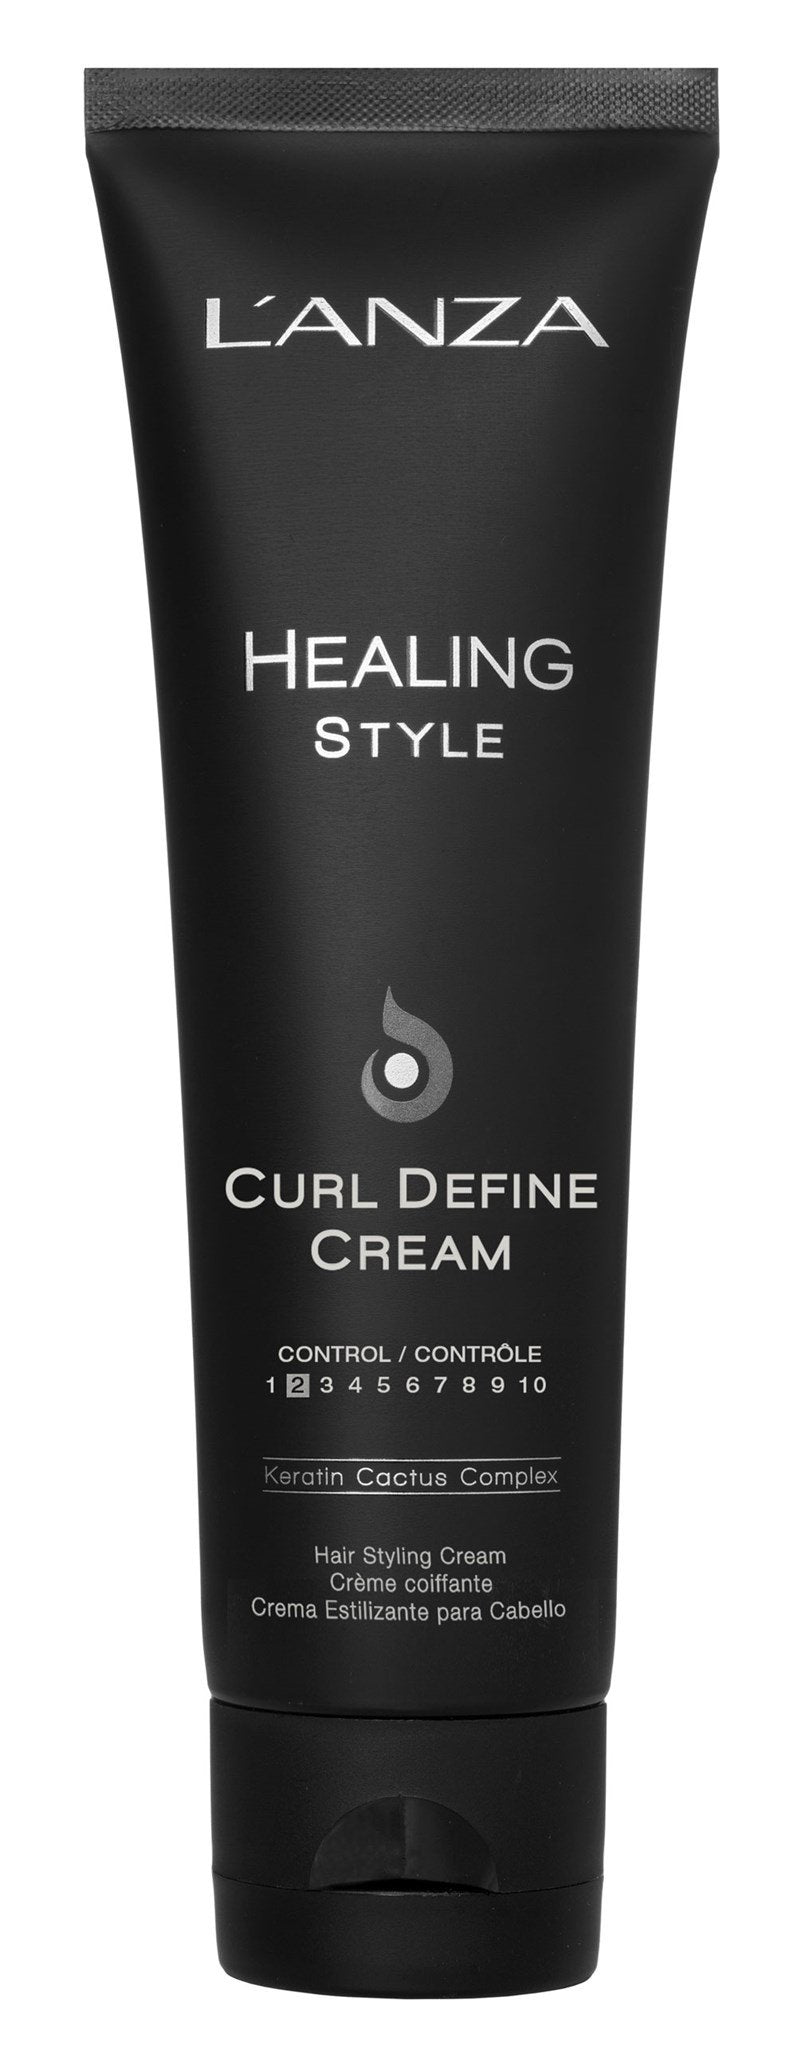 125ml Lanza Healing Style Curl Define Cream 4.4oz